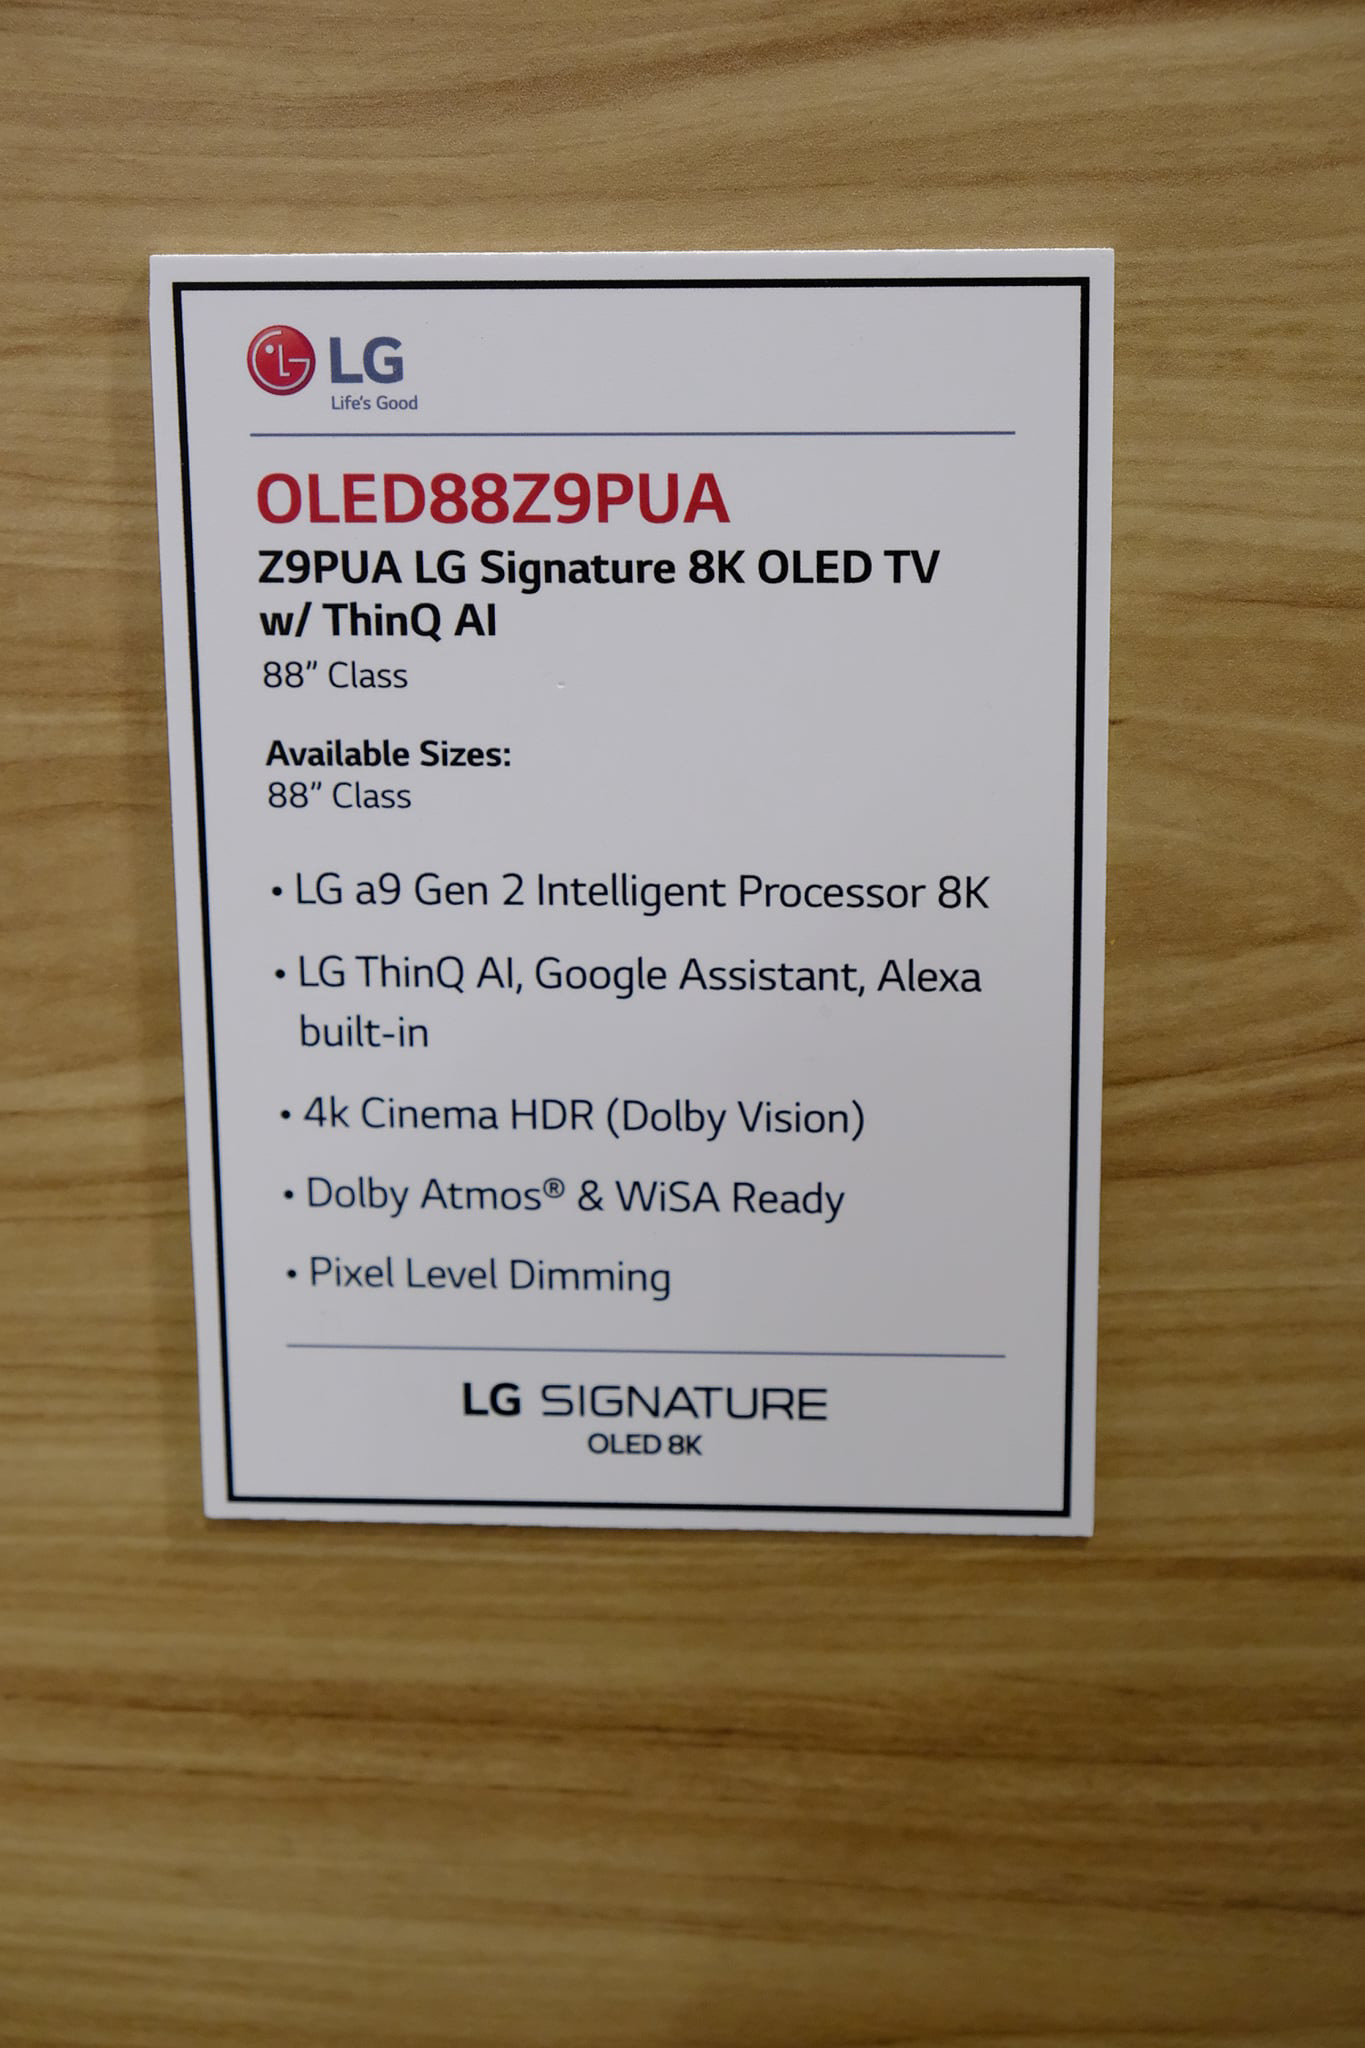 LG OLED88Z9PUA TV Specs at CEDIA 2019